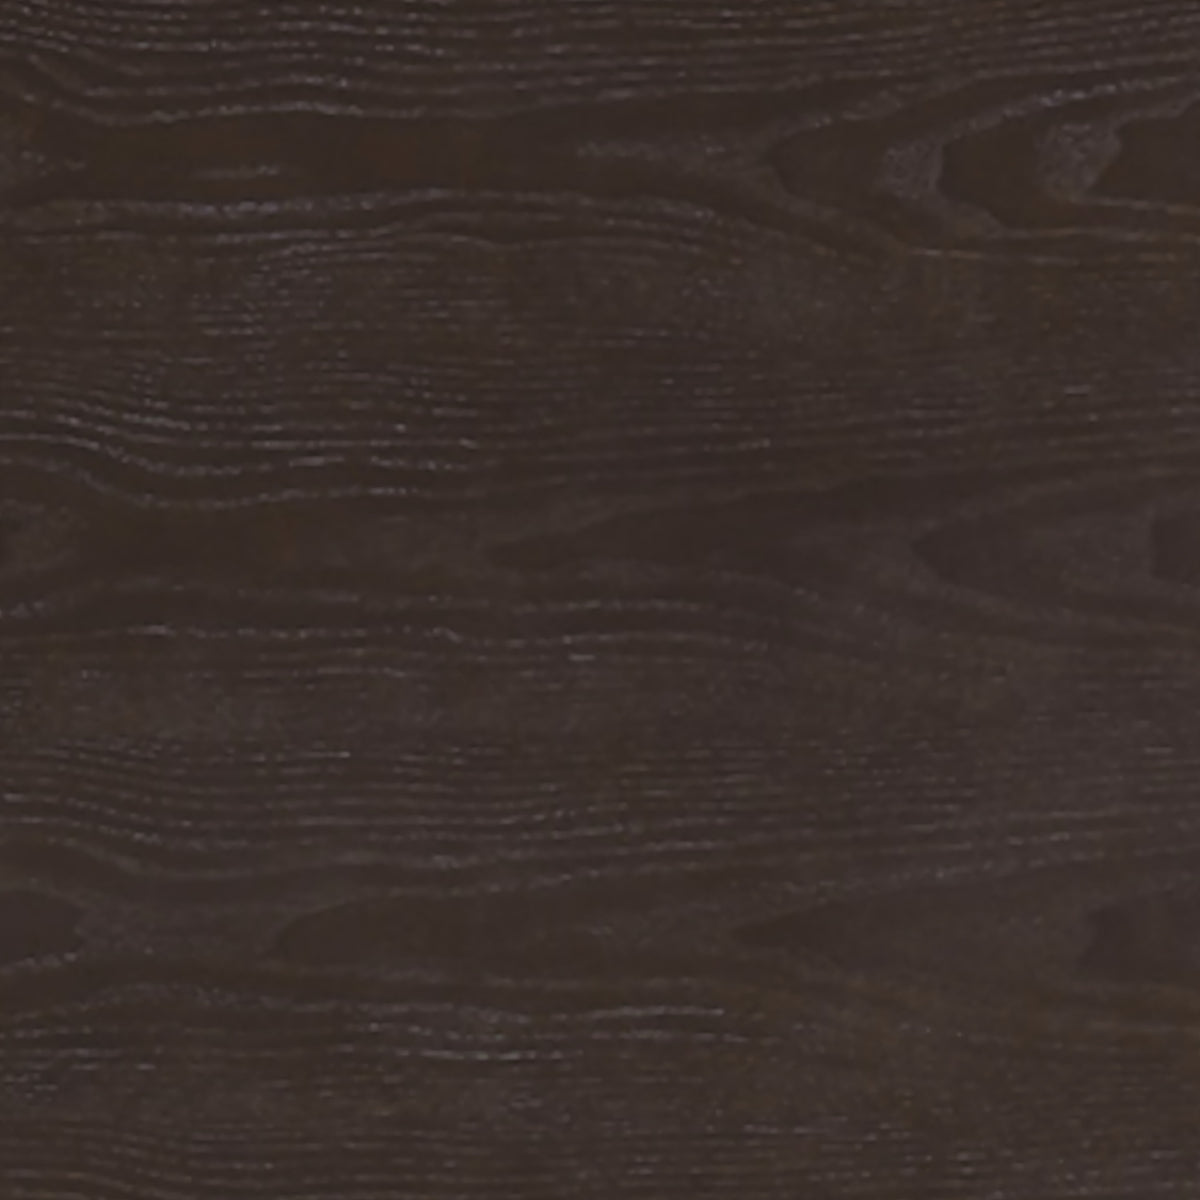 Dark Brown,Full |#| Solid Wood Platform Bed with Headboard and Wooden Slats in Dark Brown - Full